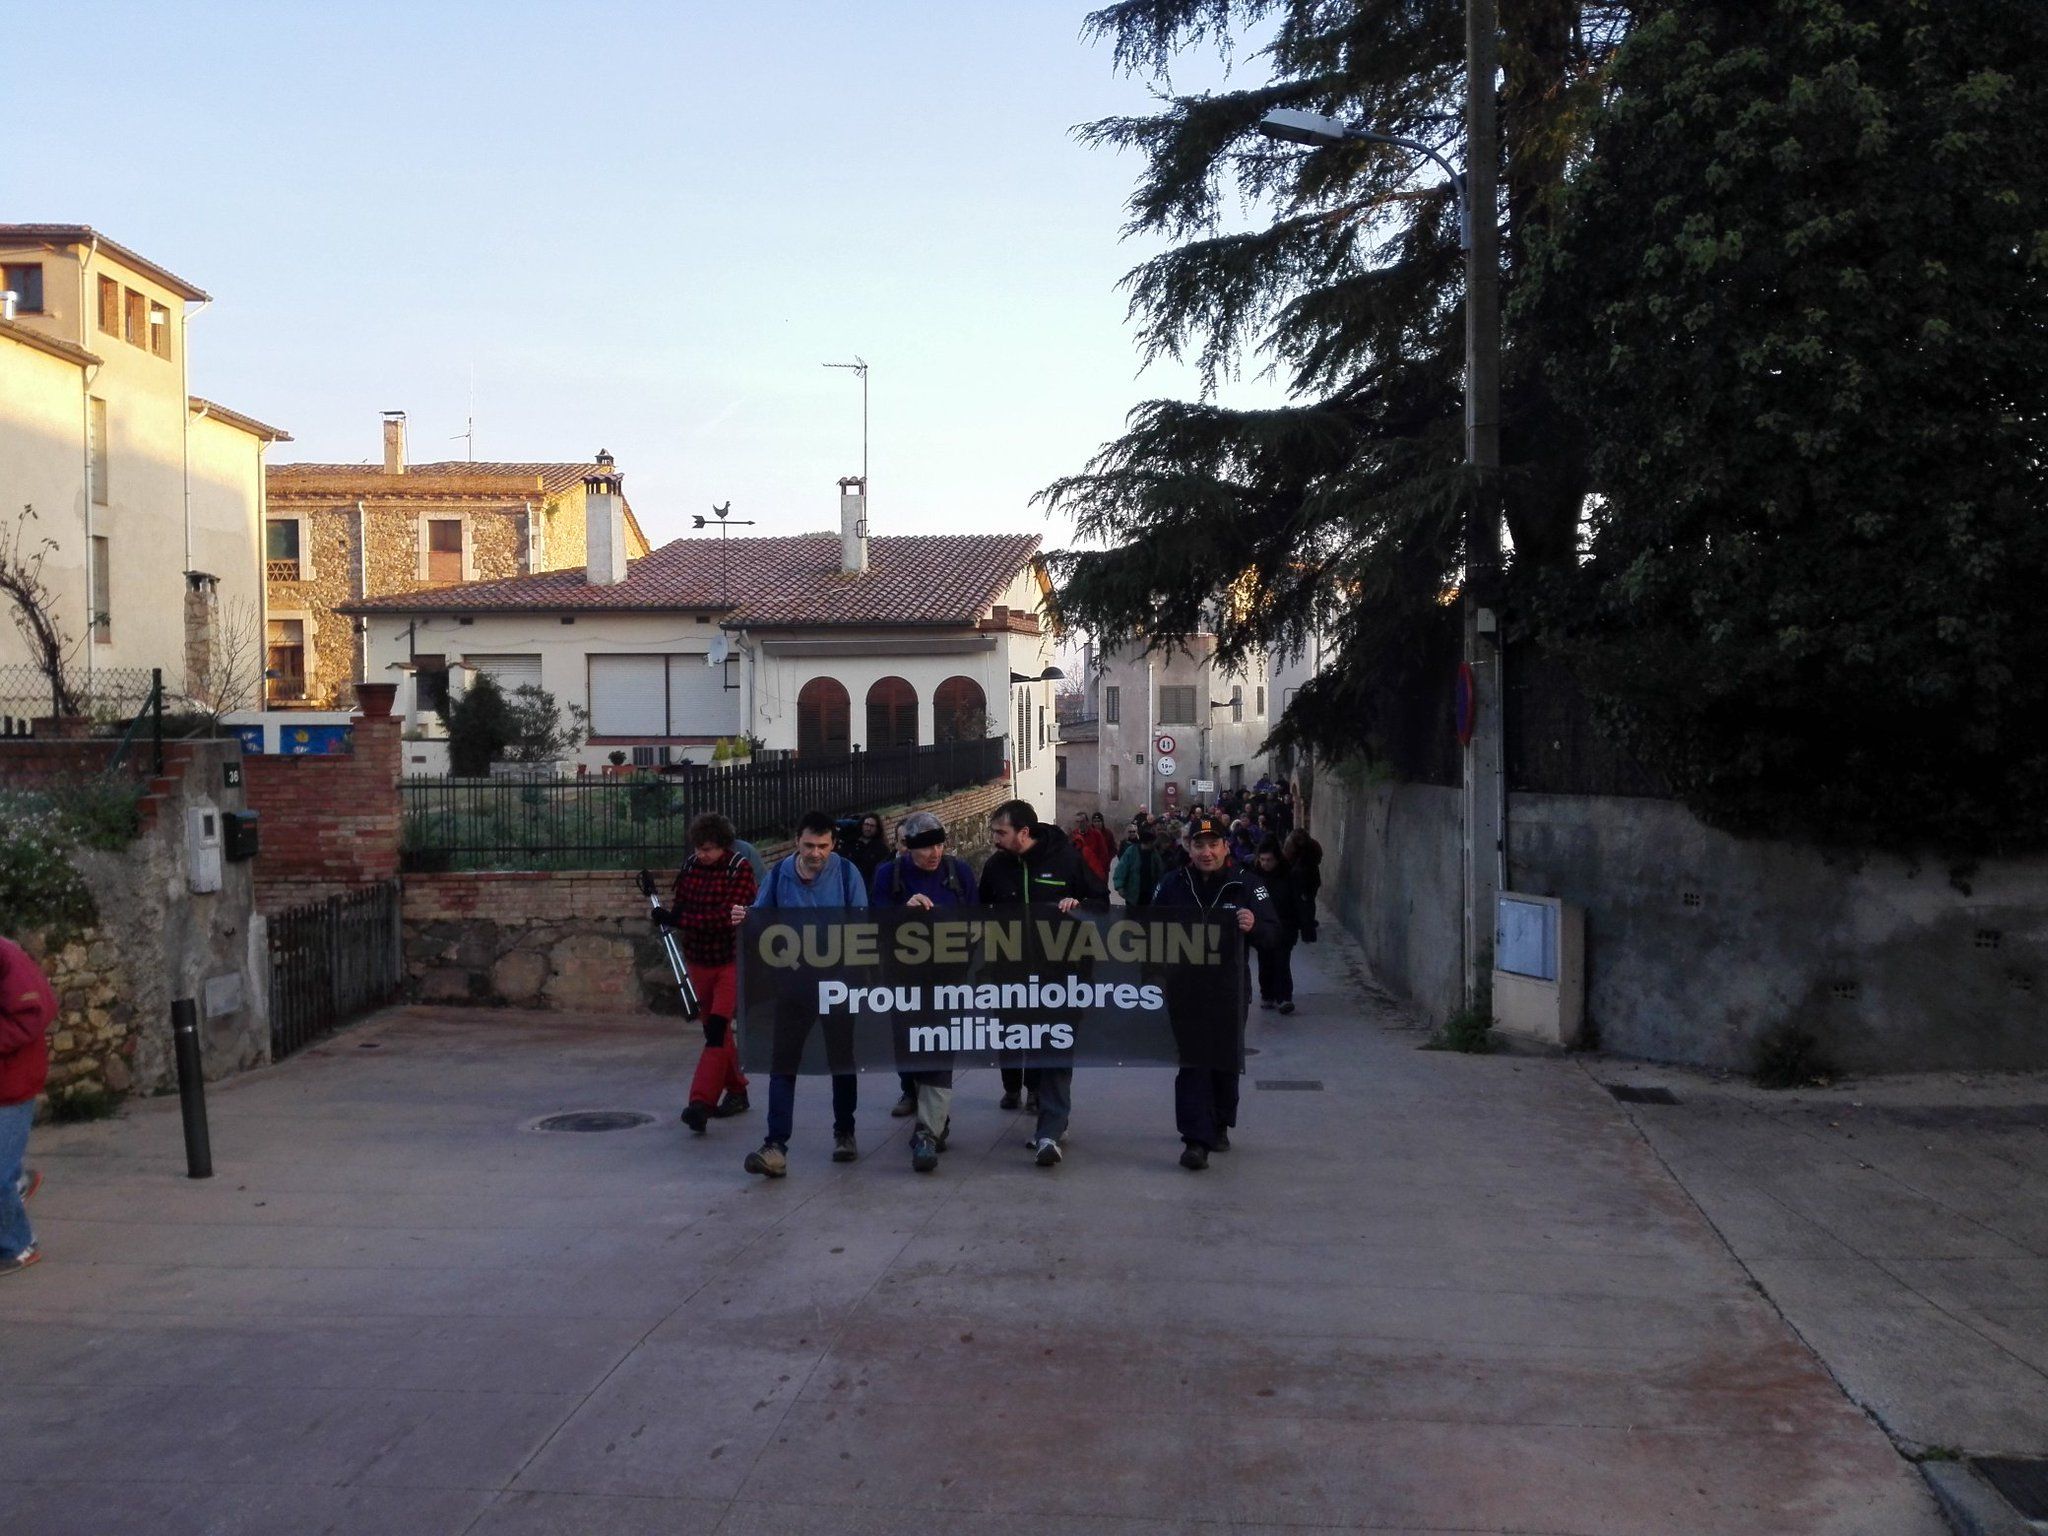 Celrà i Girona es manifesten contra les maniobres militars: "Que se'n vagin"